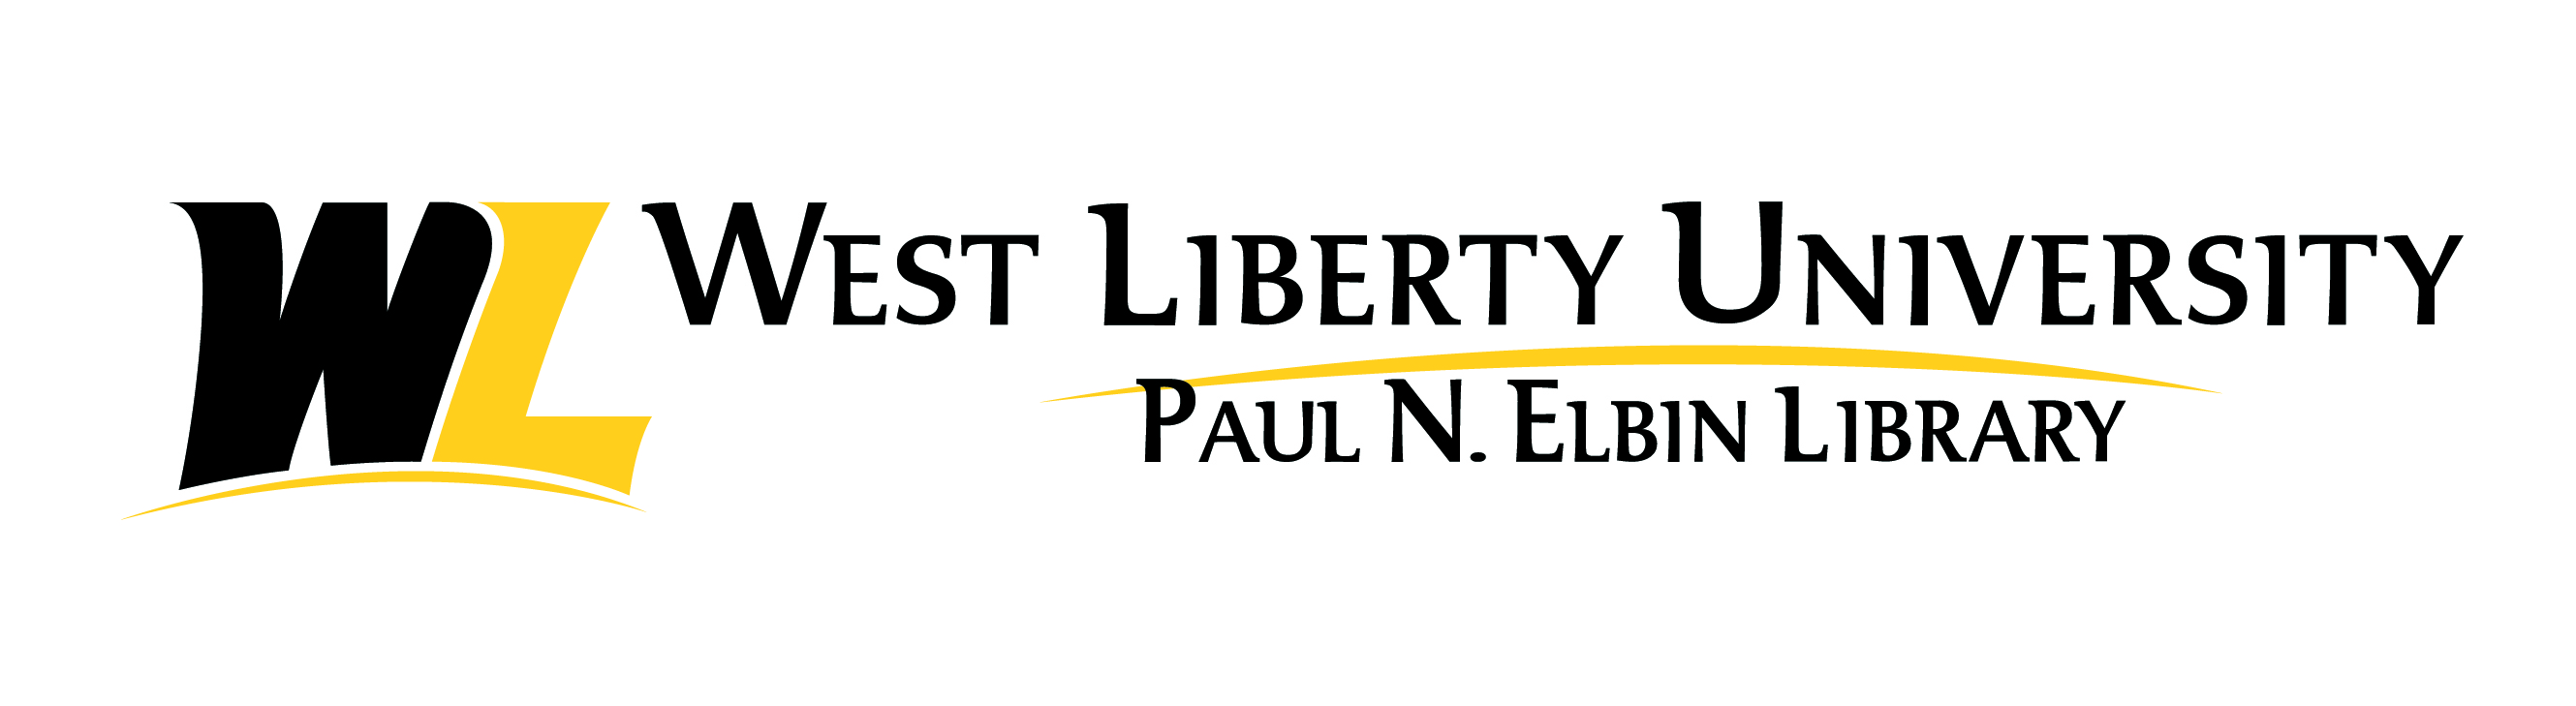 West Liberty University - Paul N. Elbin Library Log